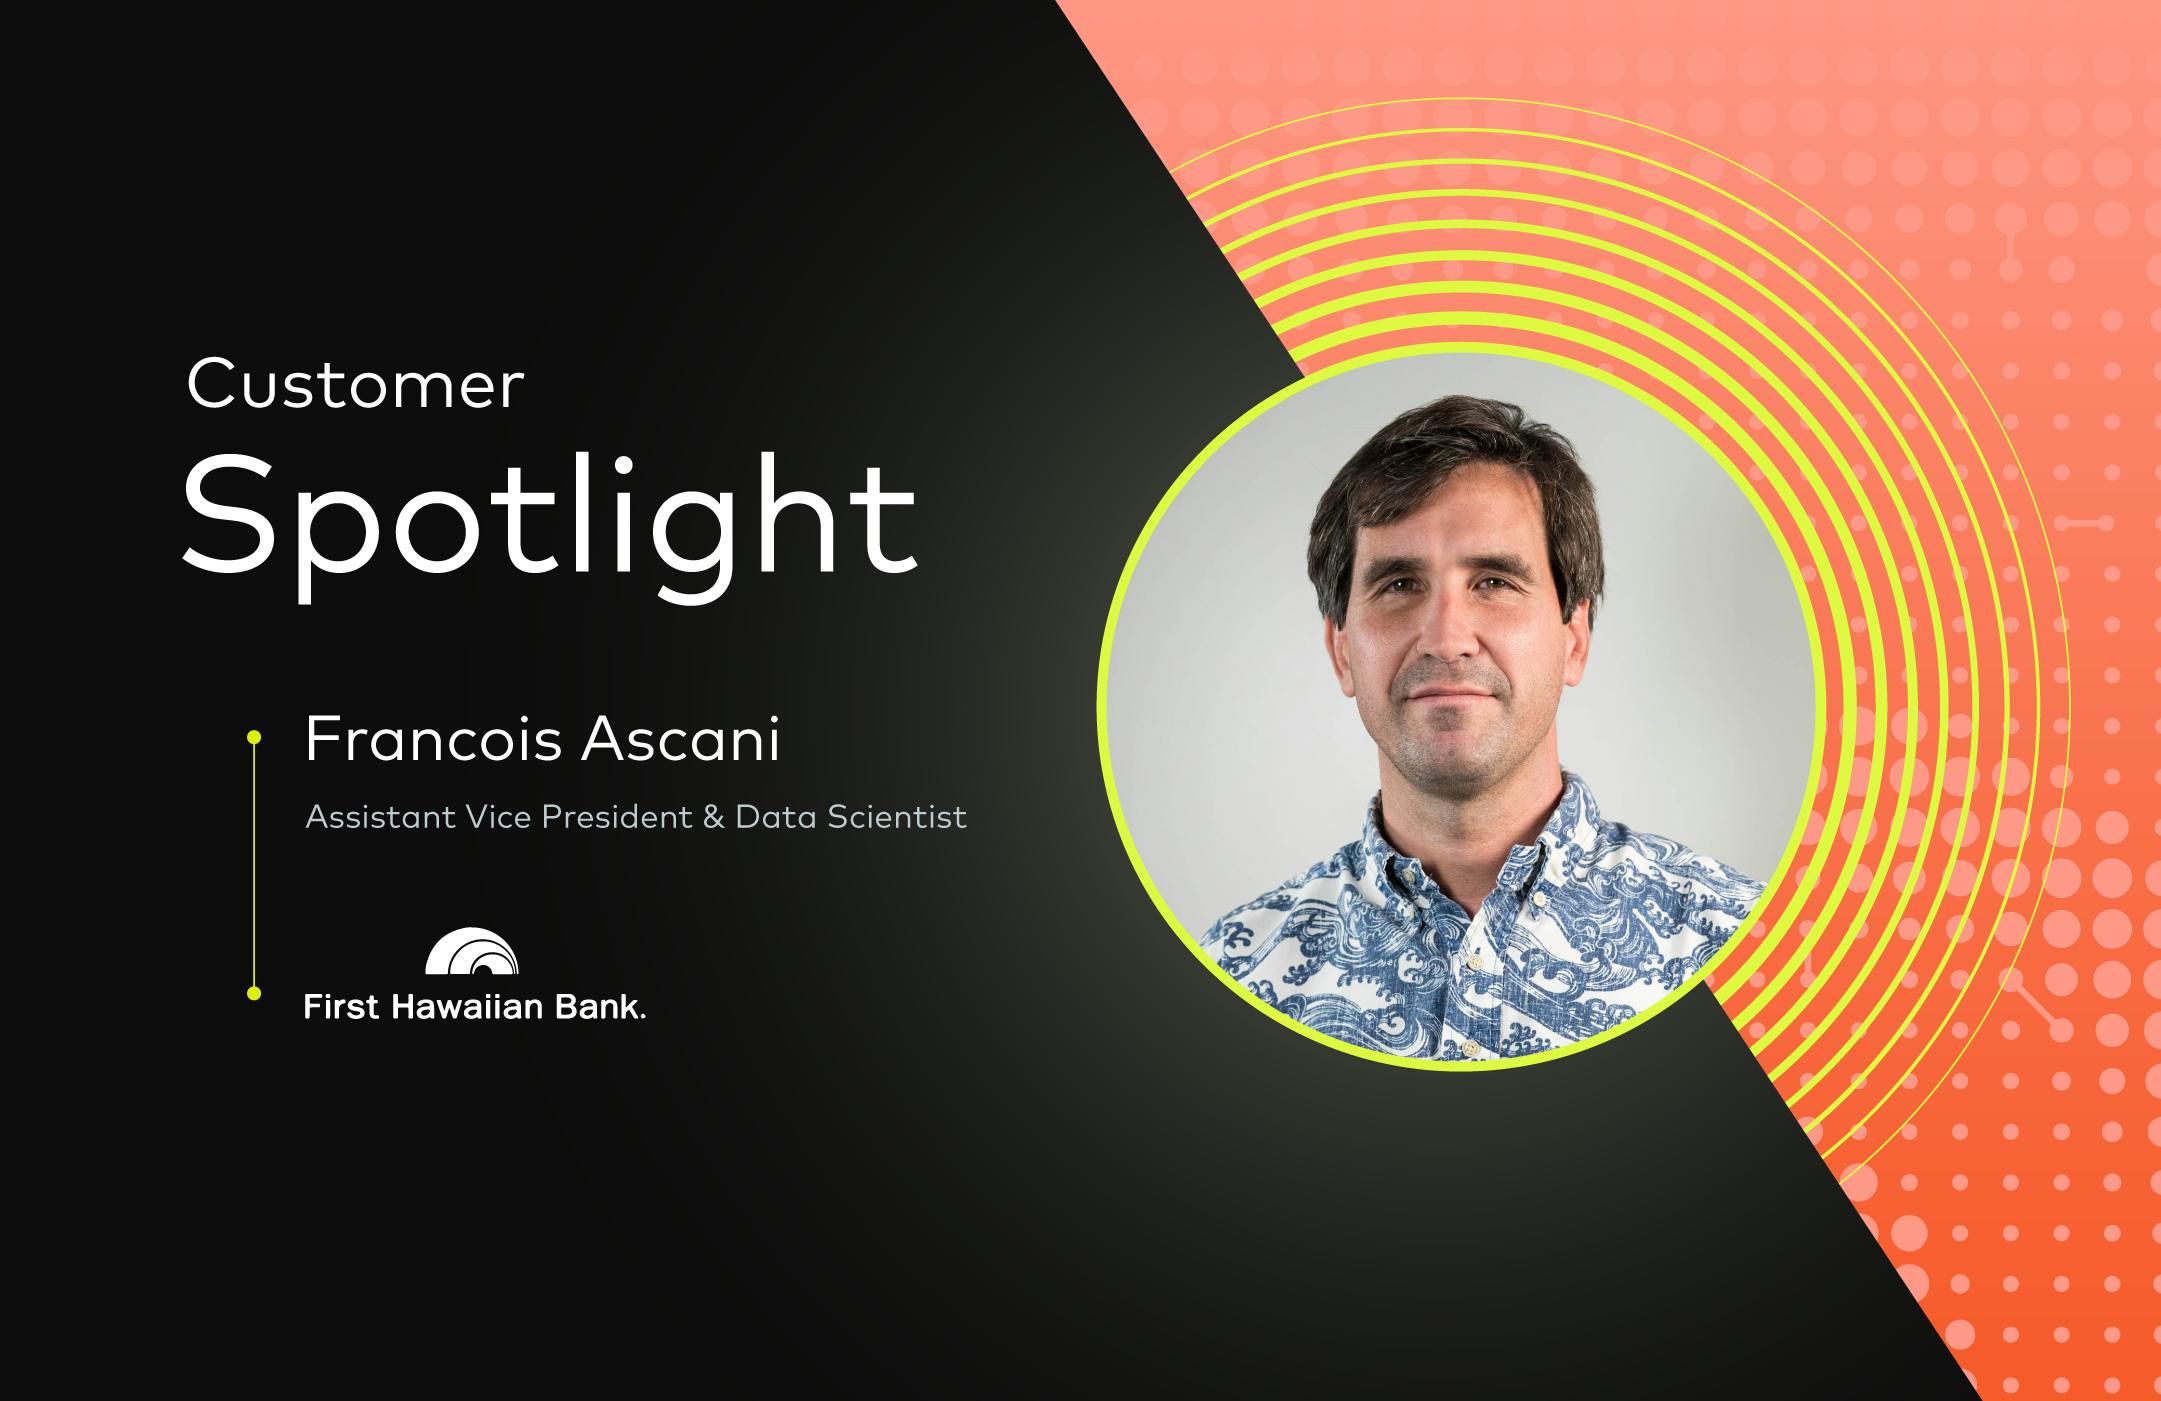 Customer Spotlight: Francois Ascani at First Hawaiian Bank